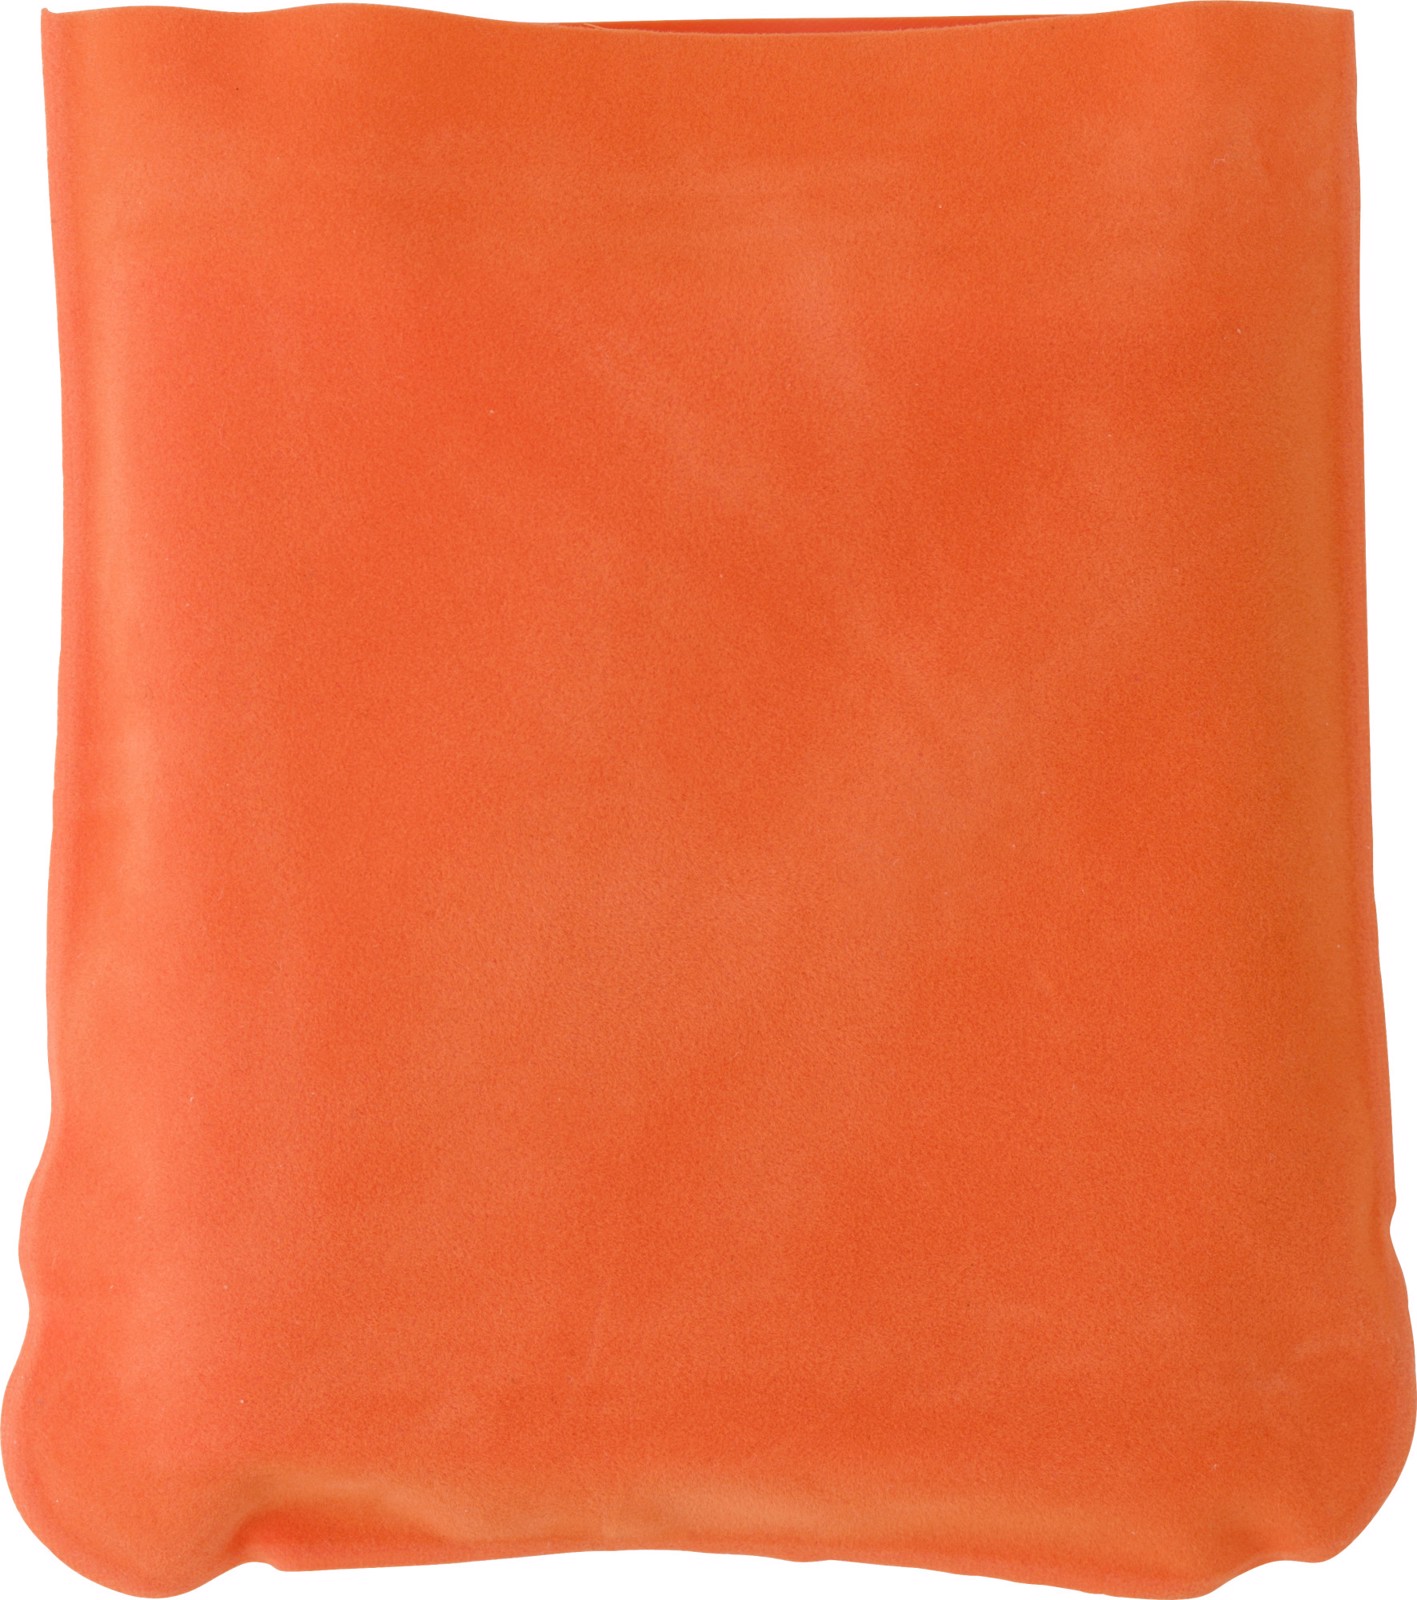 Velour travel cushion - Orange